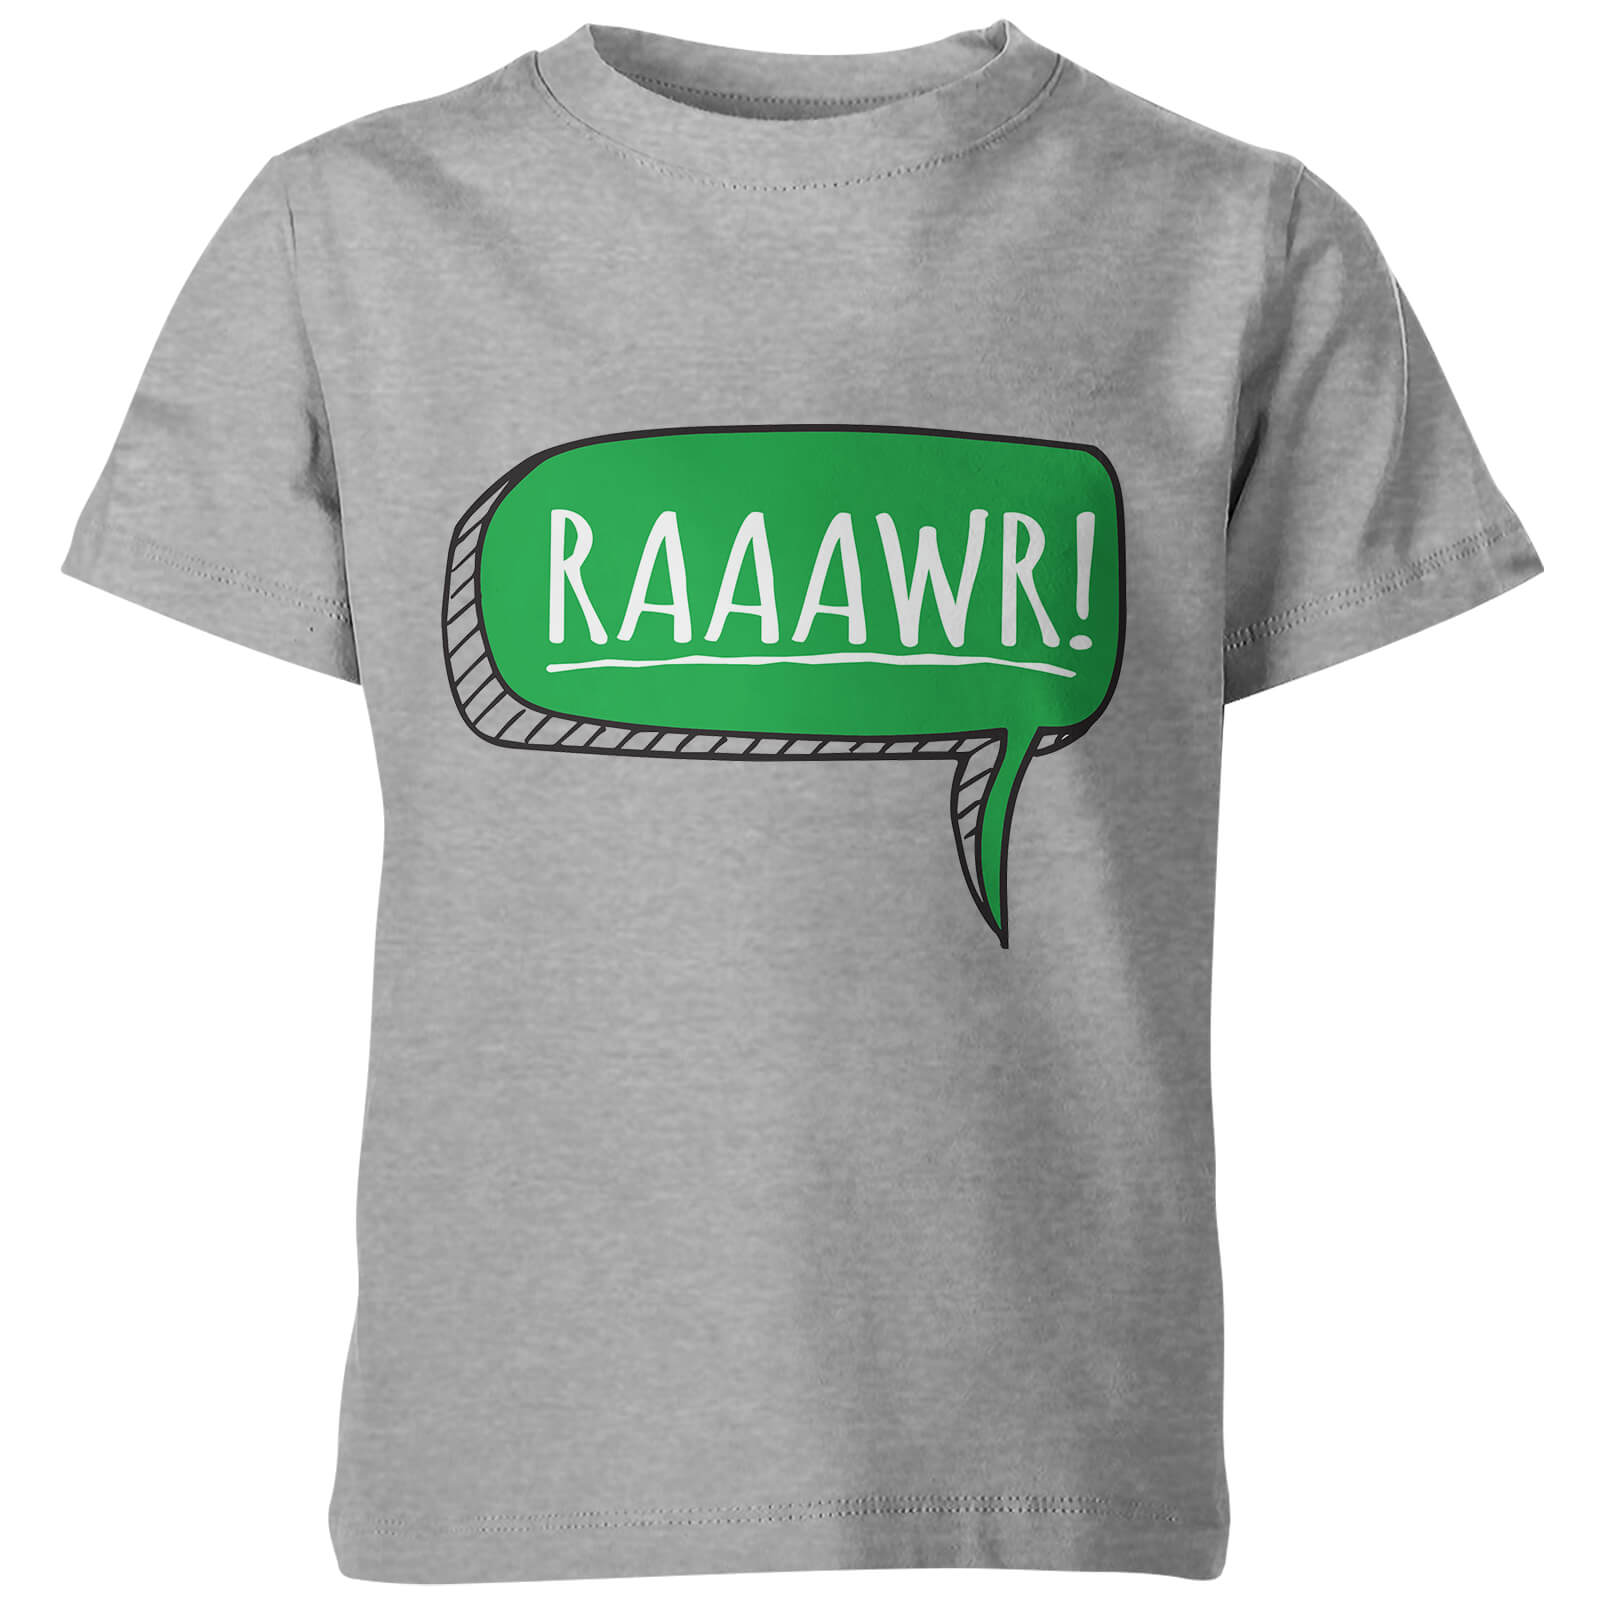 My Little Rascal Kids Dinosaur Rawr! Grey T-Shirt - 3-4 Years - Grey